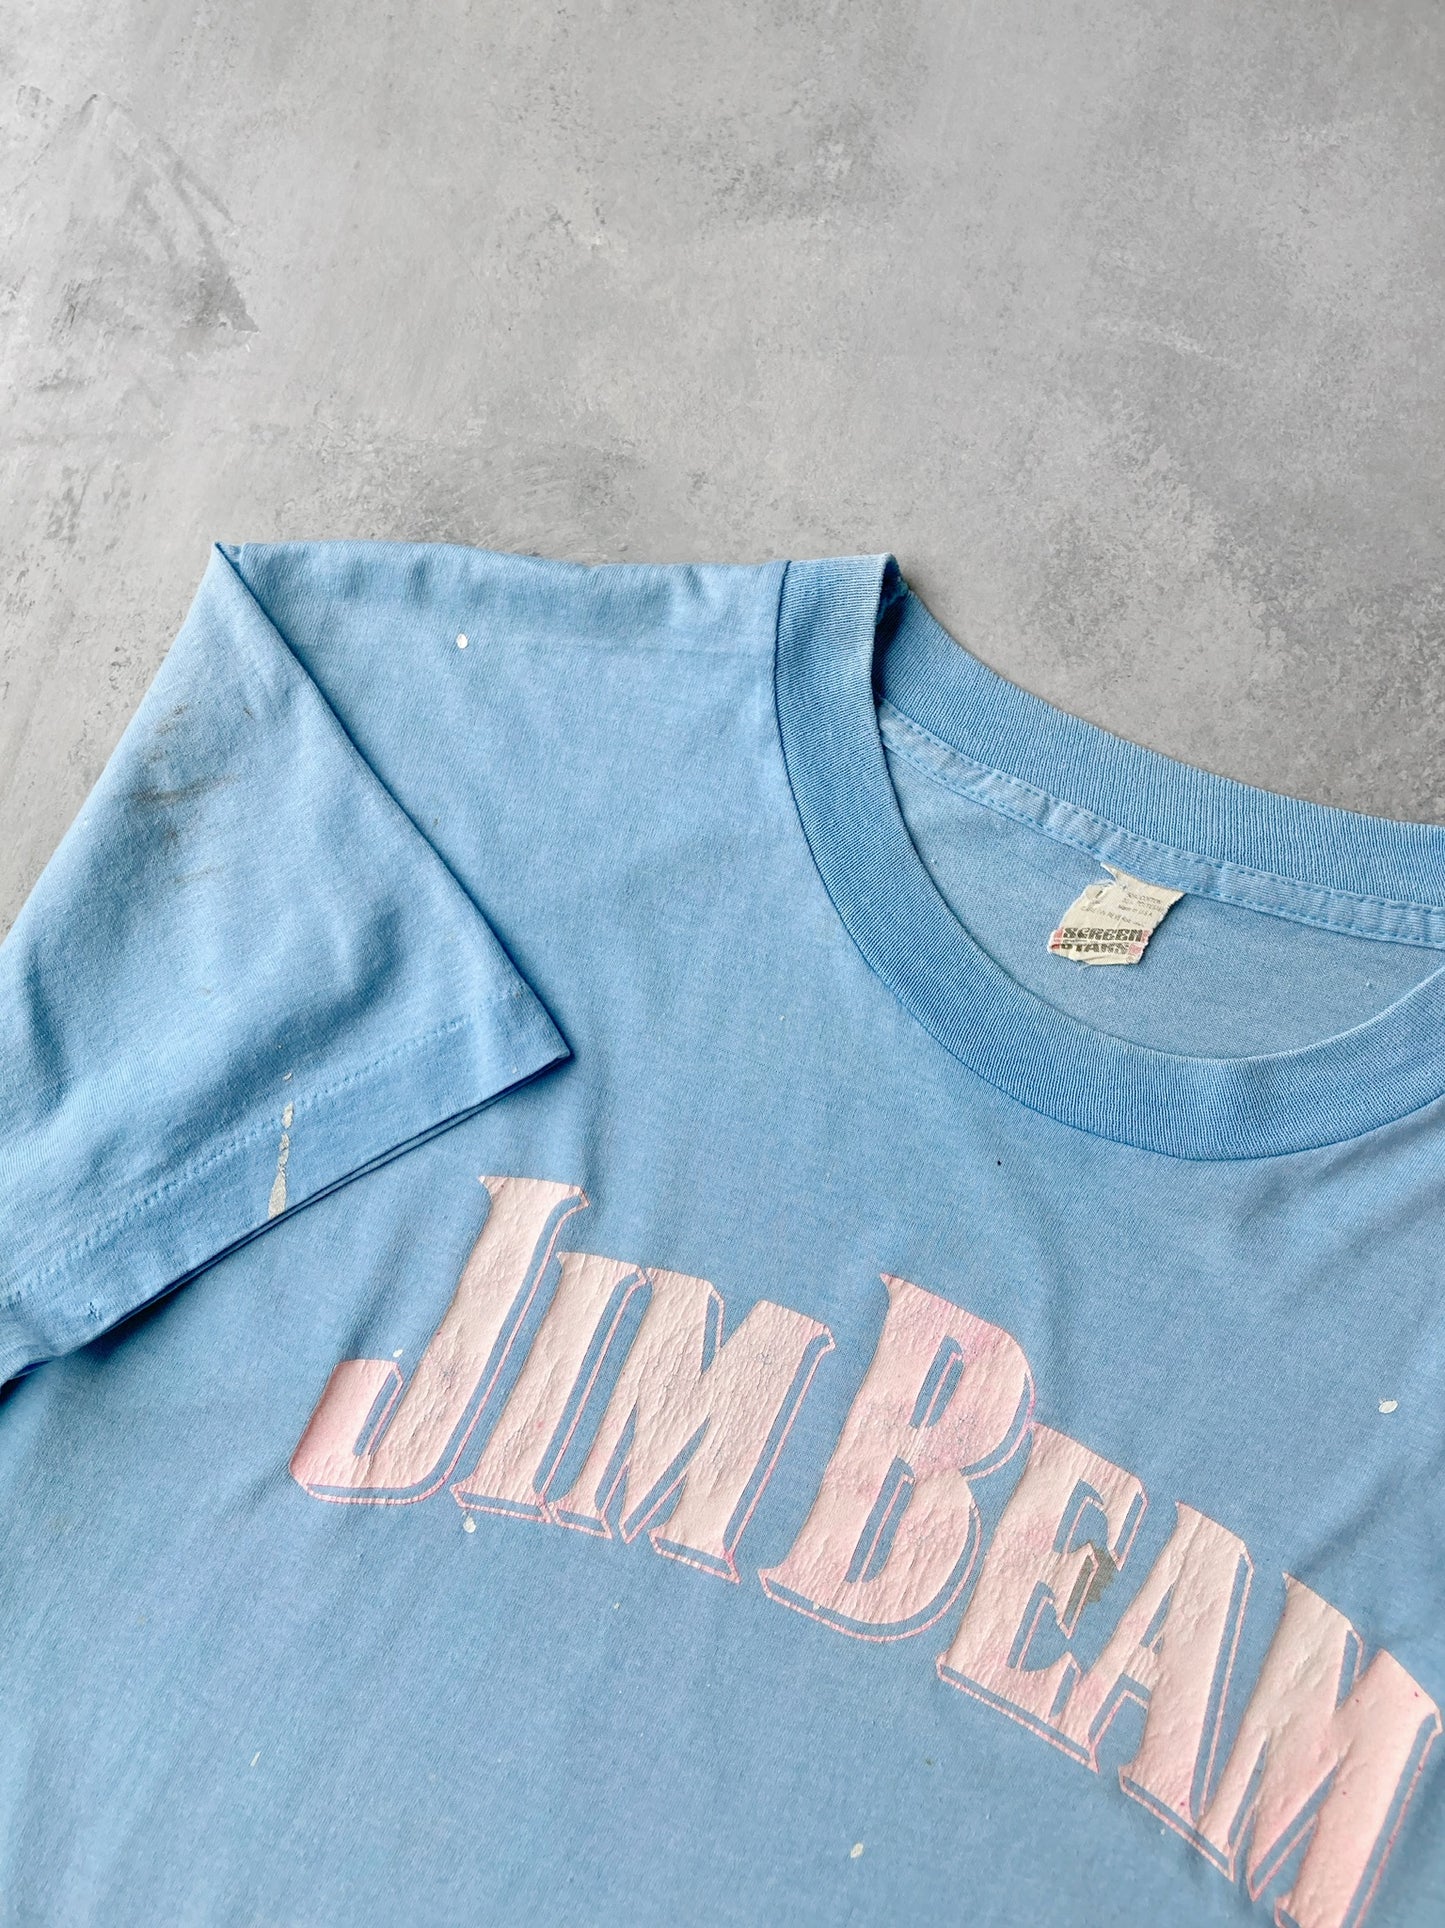 Kenilworth Pub Jim Beam T-Shirt 80's - Large